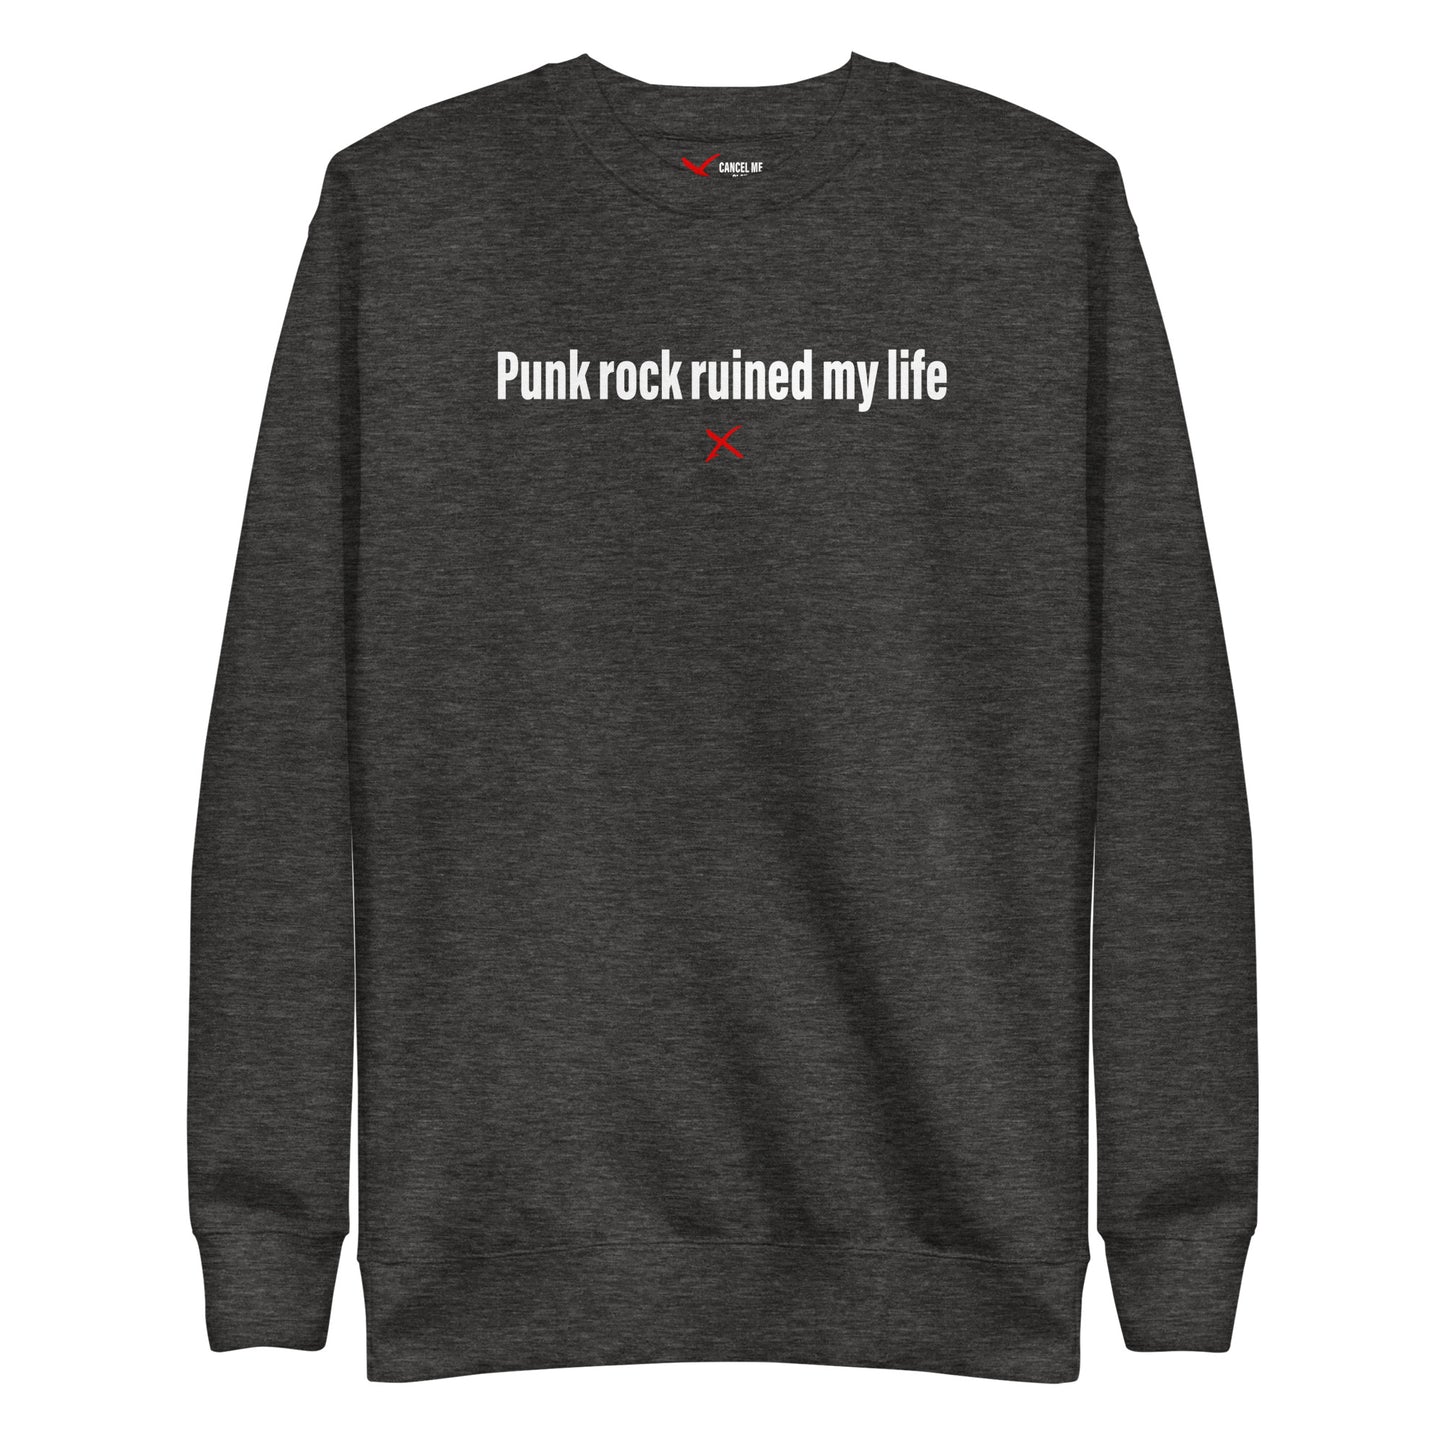 Punk rock ruined my life - Sweatshirt